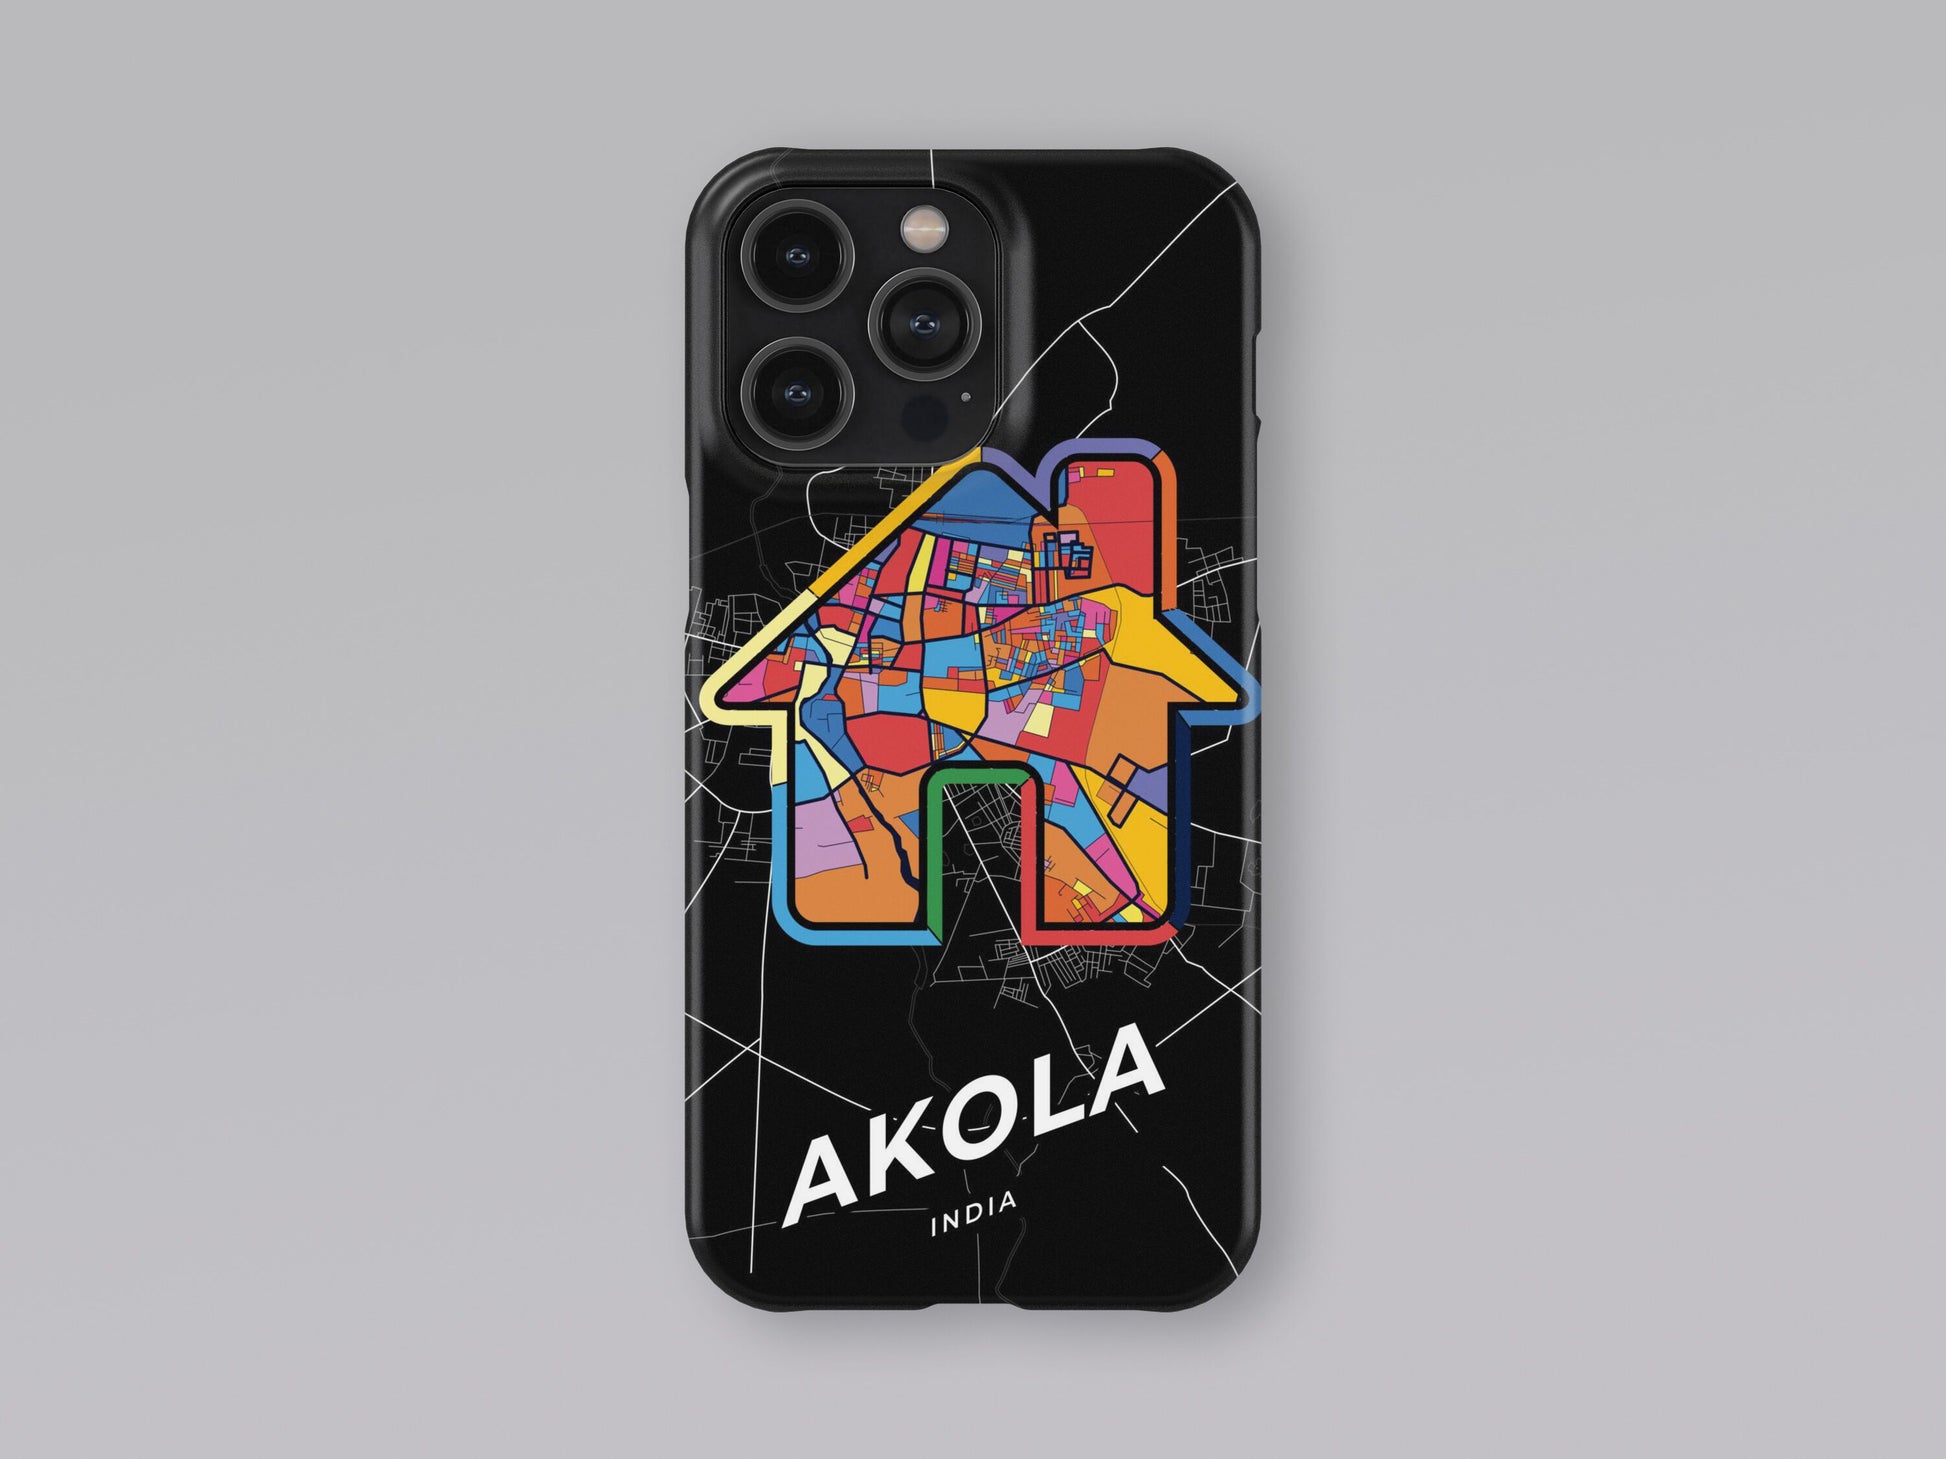 Akola India slim phone case with colorful icon. Birthday, wedding or housewarming gift. Couple match cases. 3